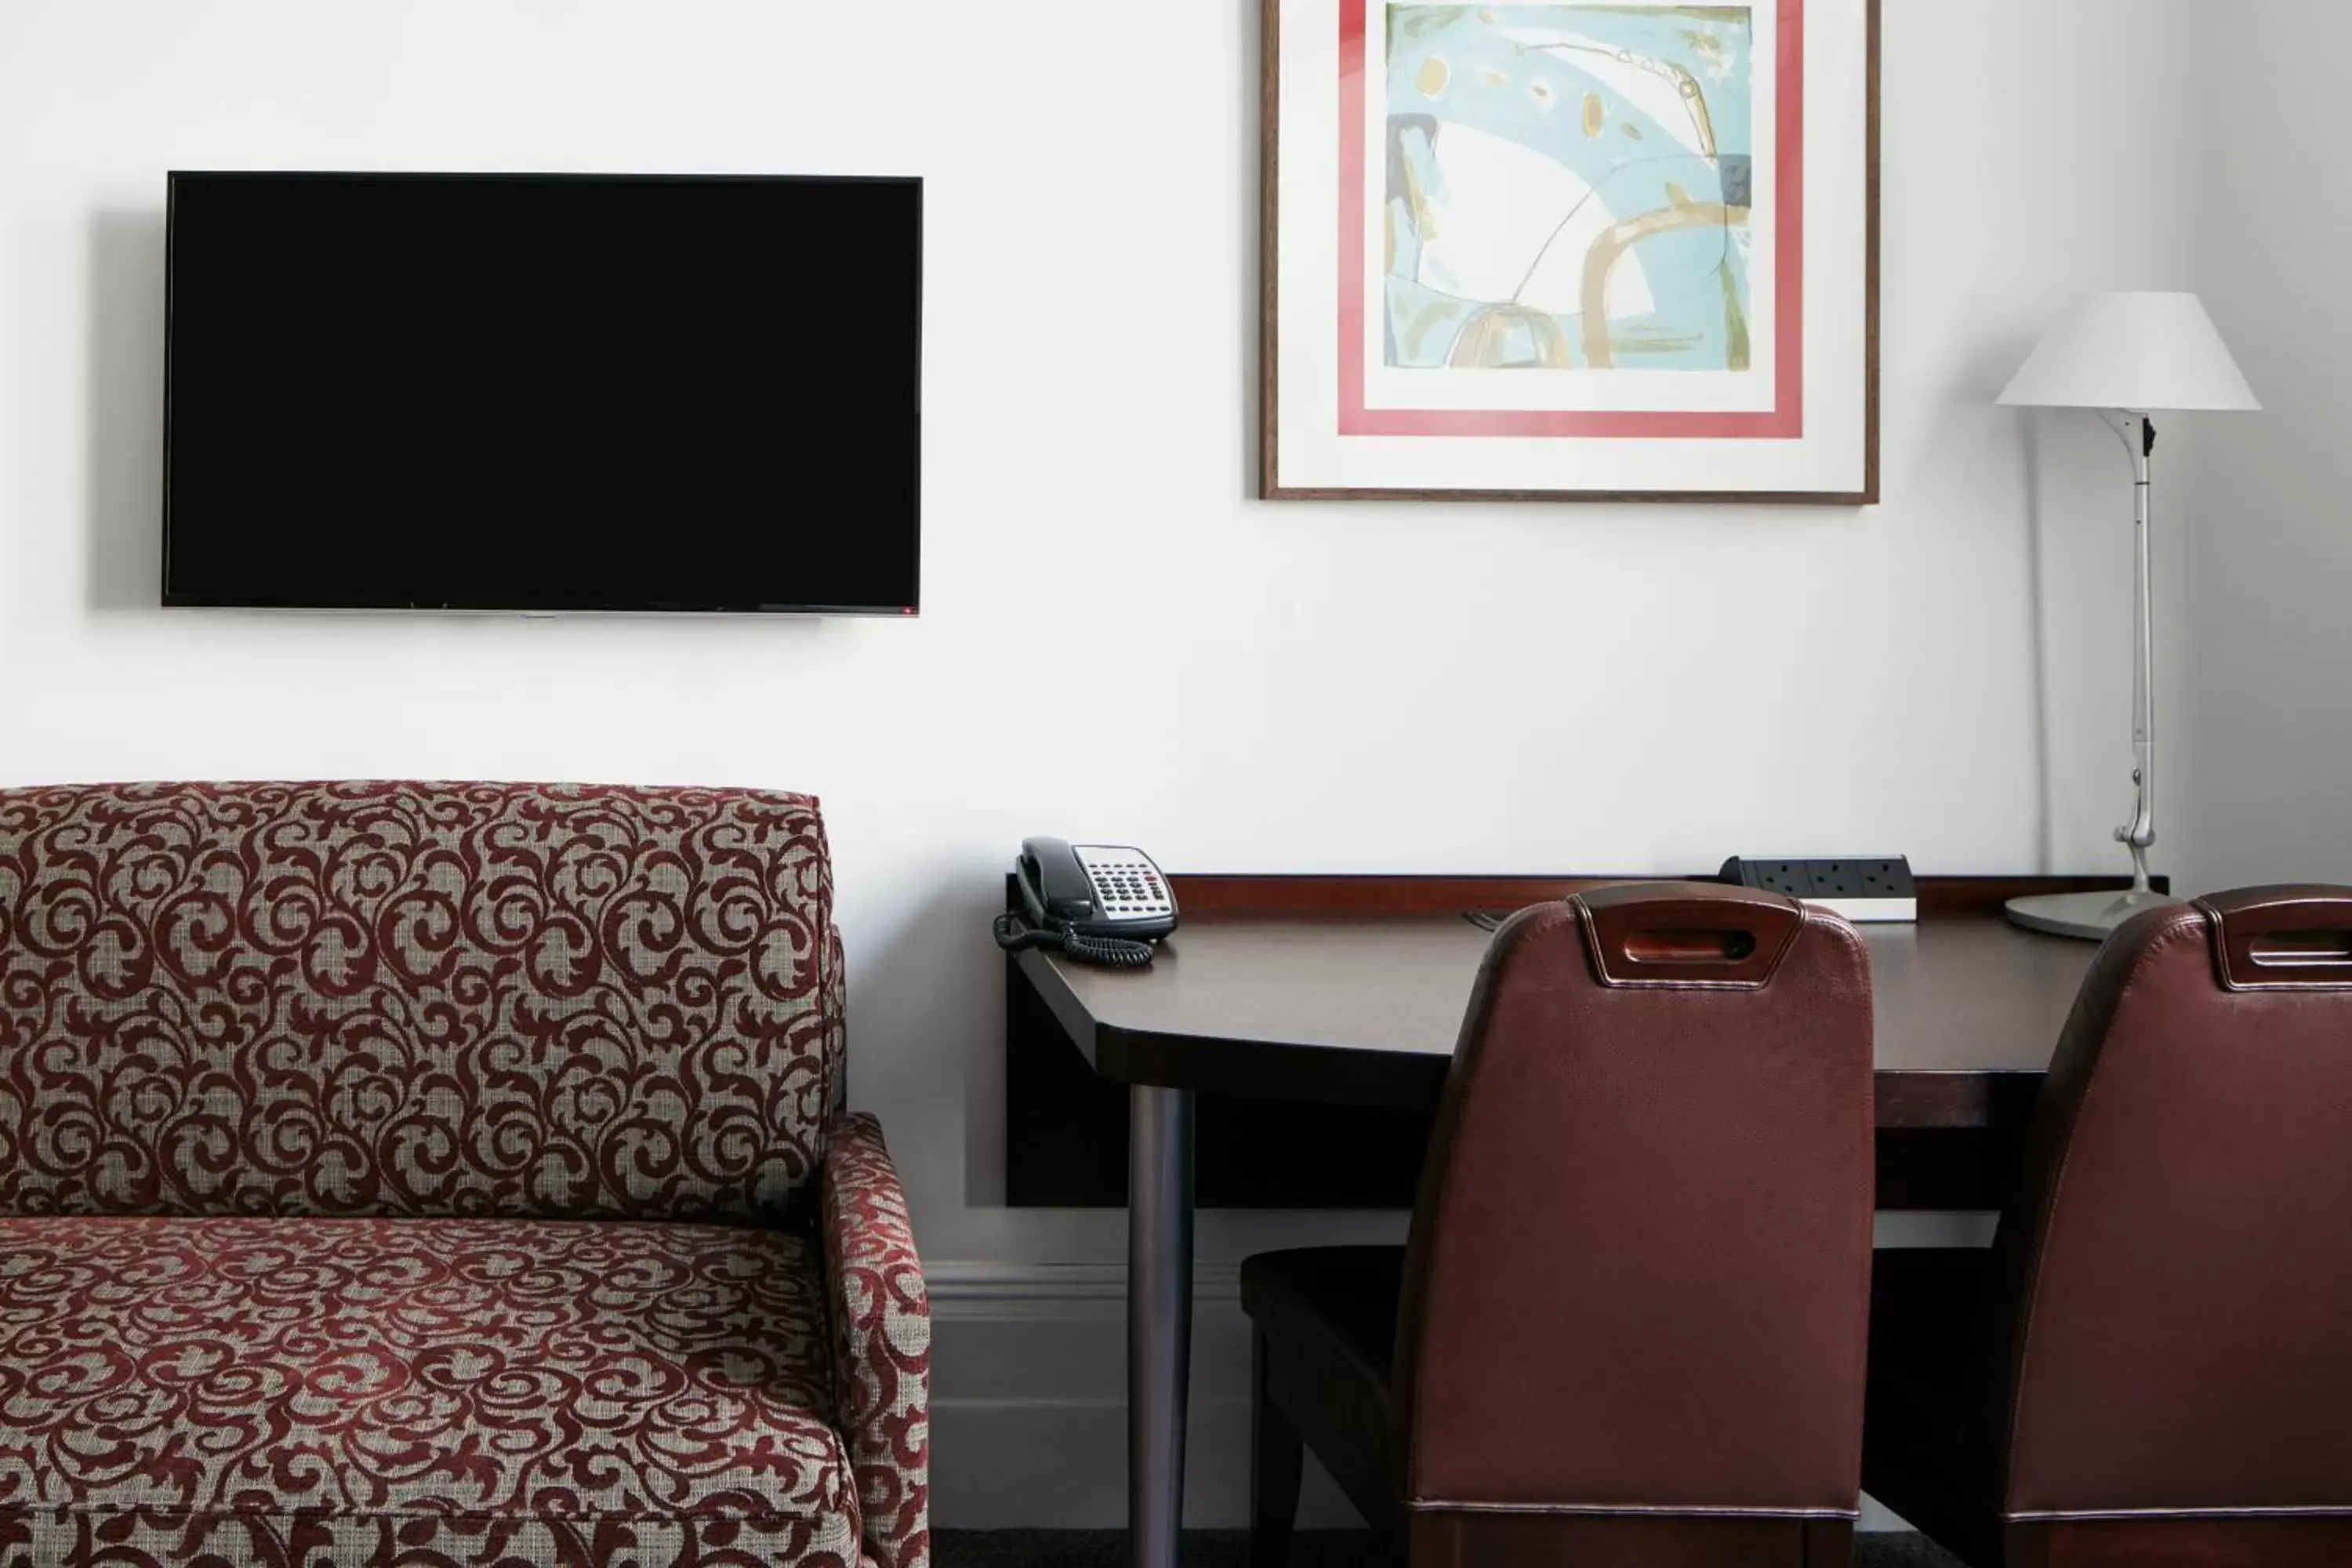 TV and multimedia, Seating Area in Club Quarters Hotel Trafalgar Square, London